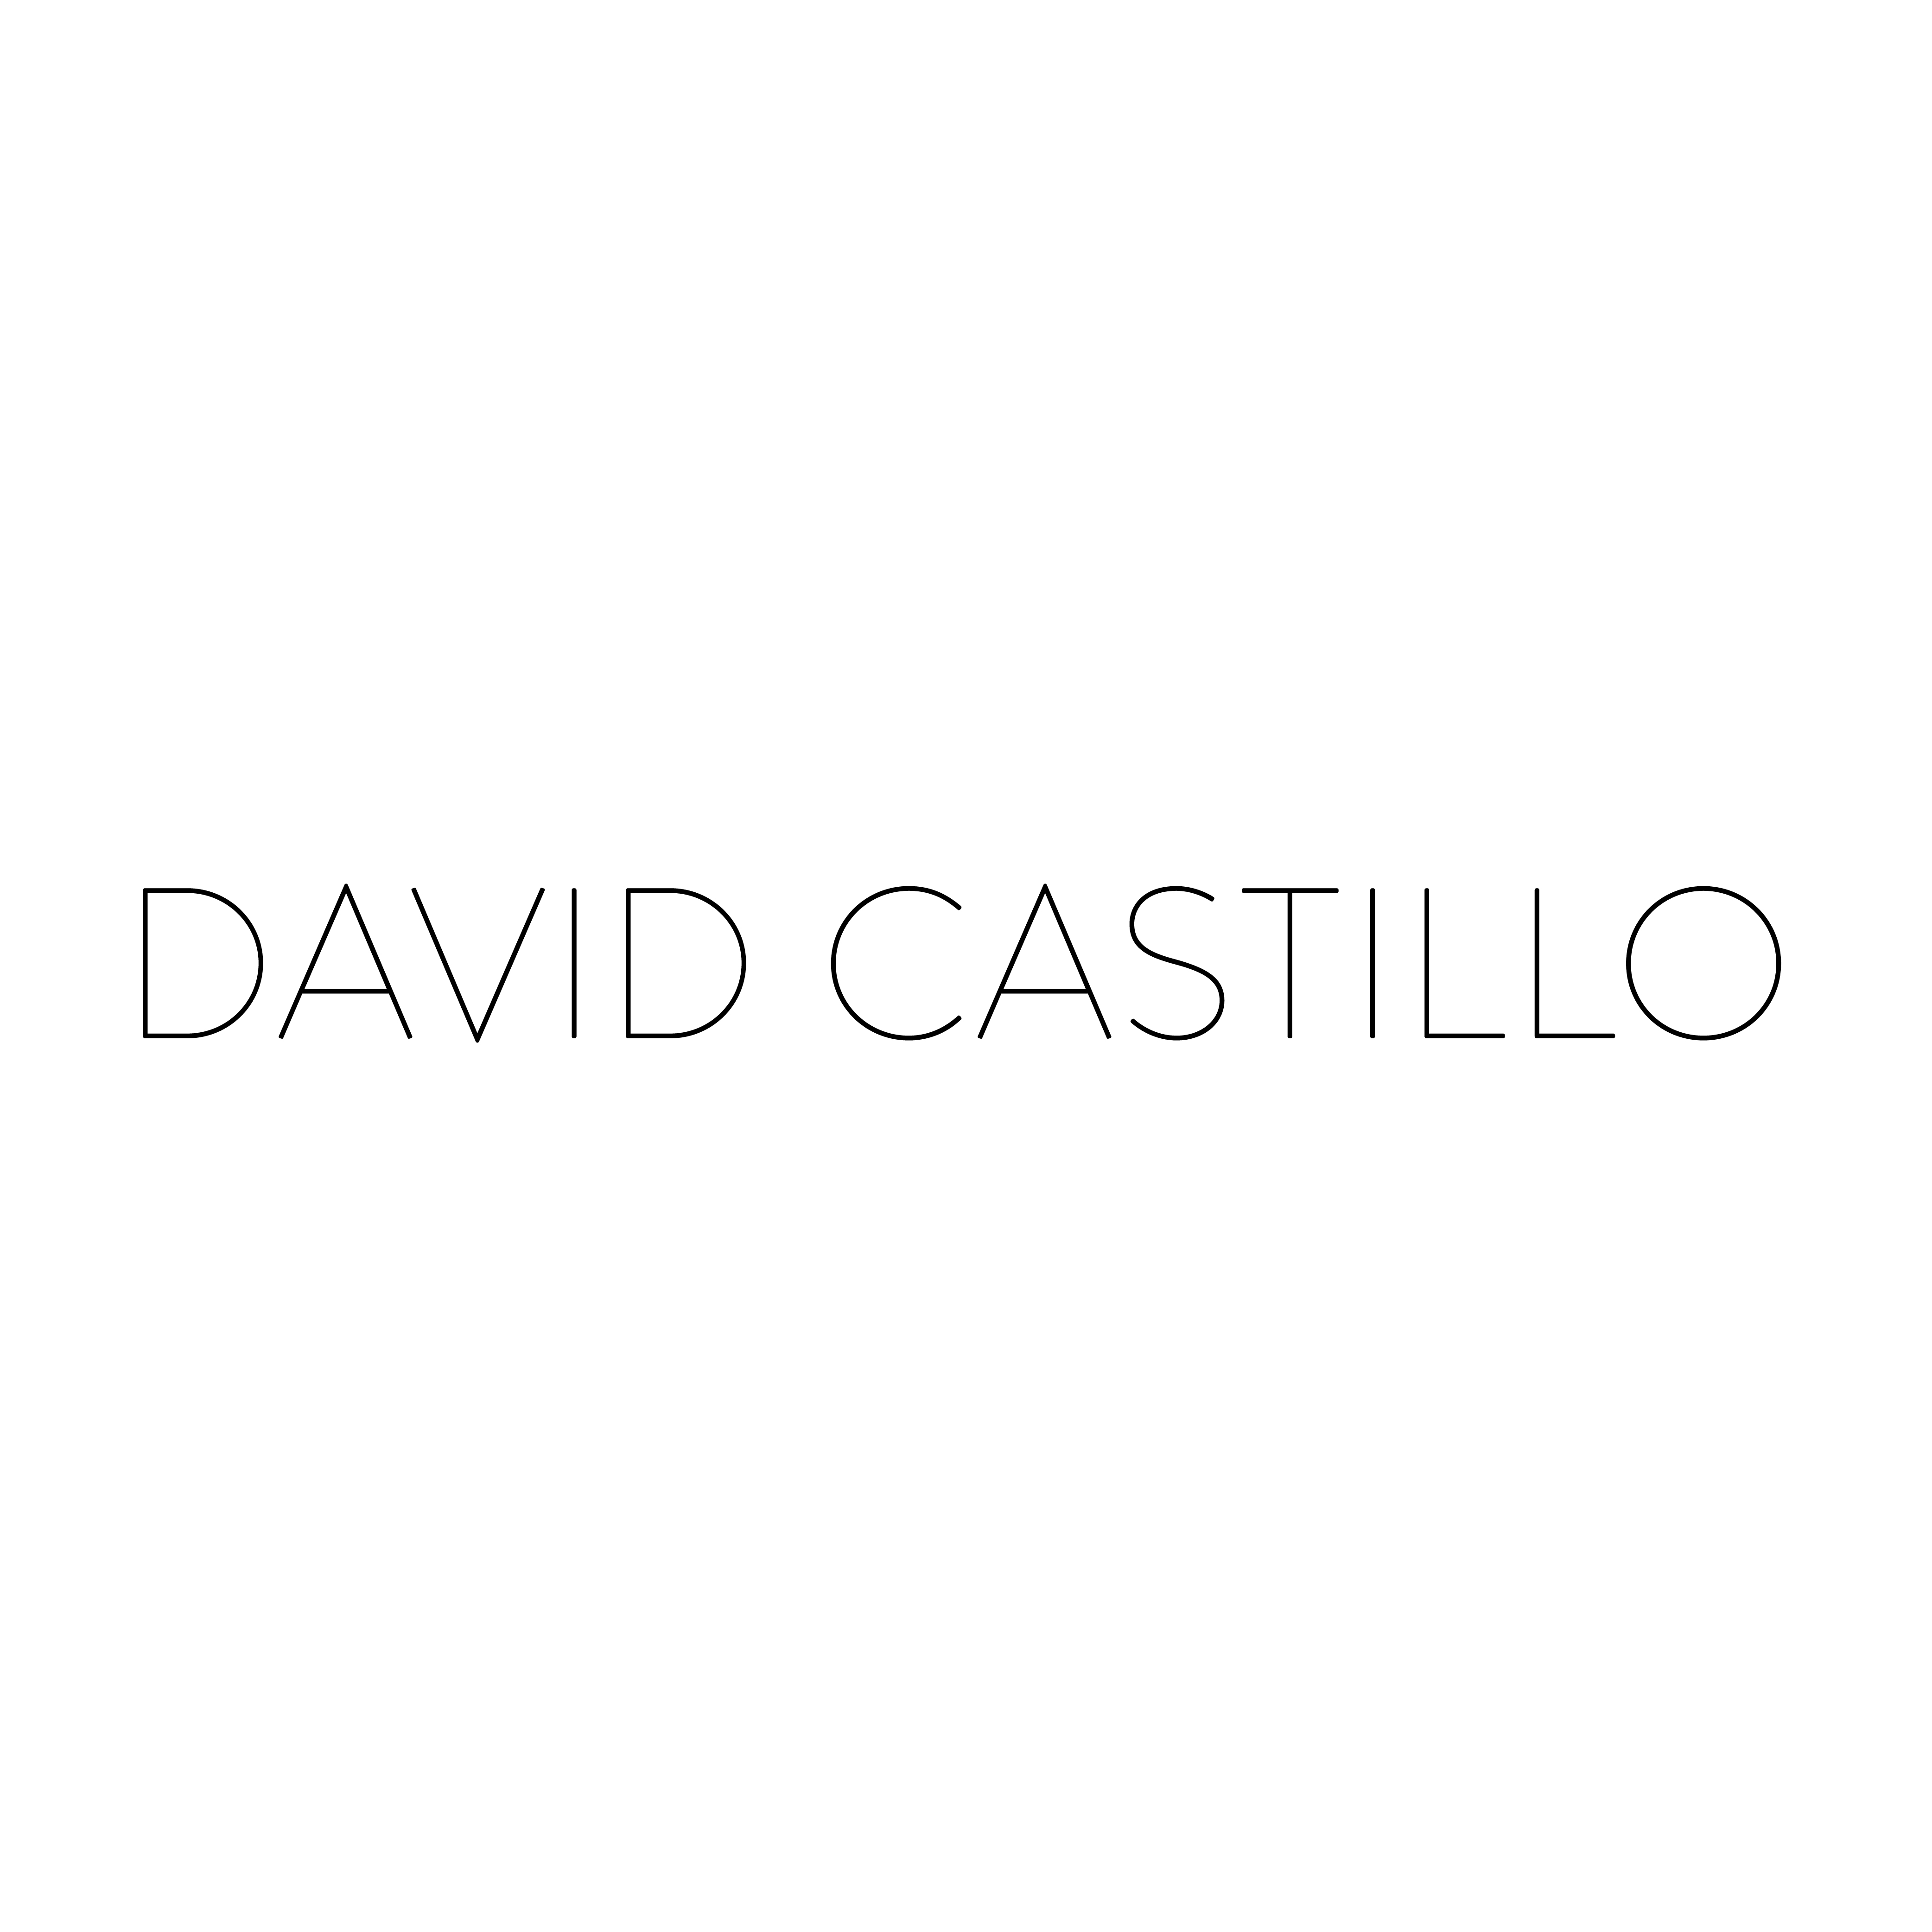 About the Artwork David Castillo Final Logo 1000x1000.jpg 